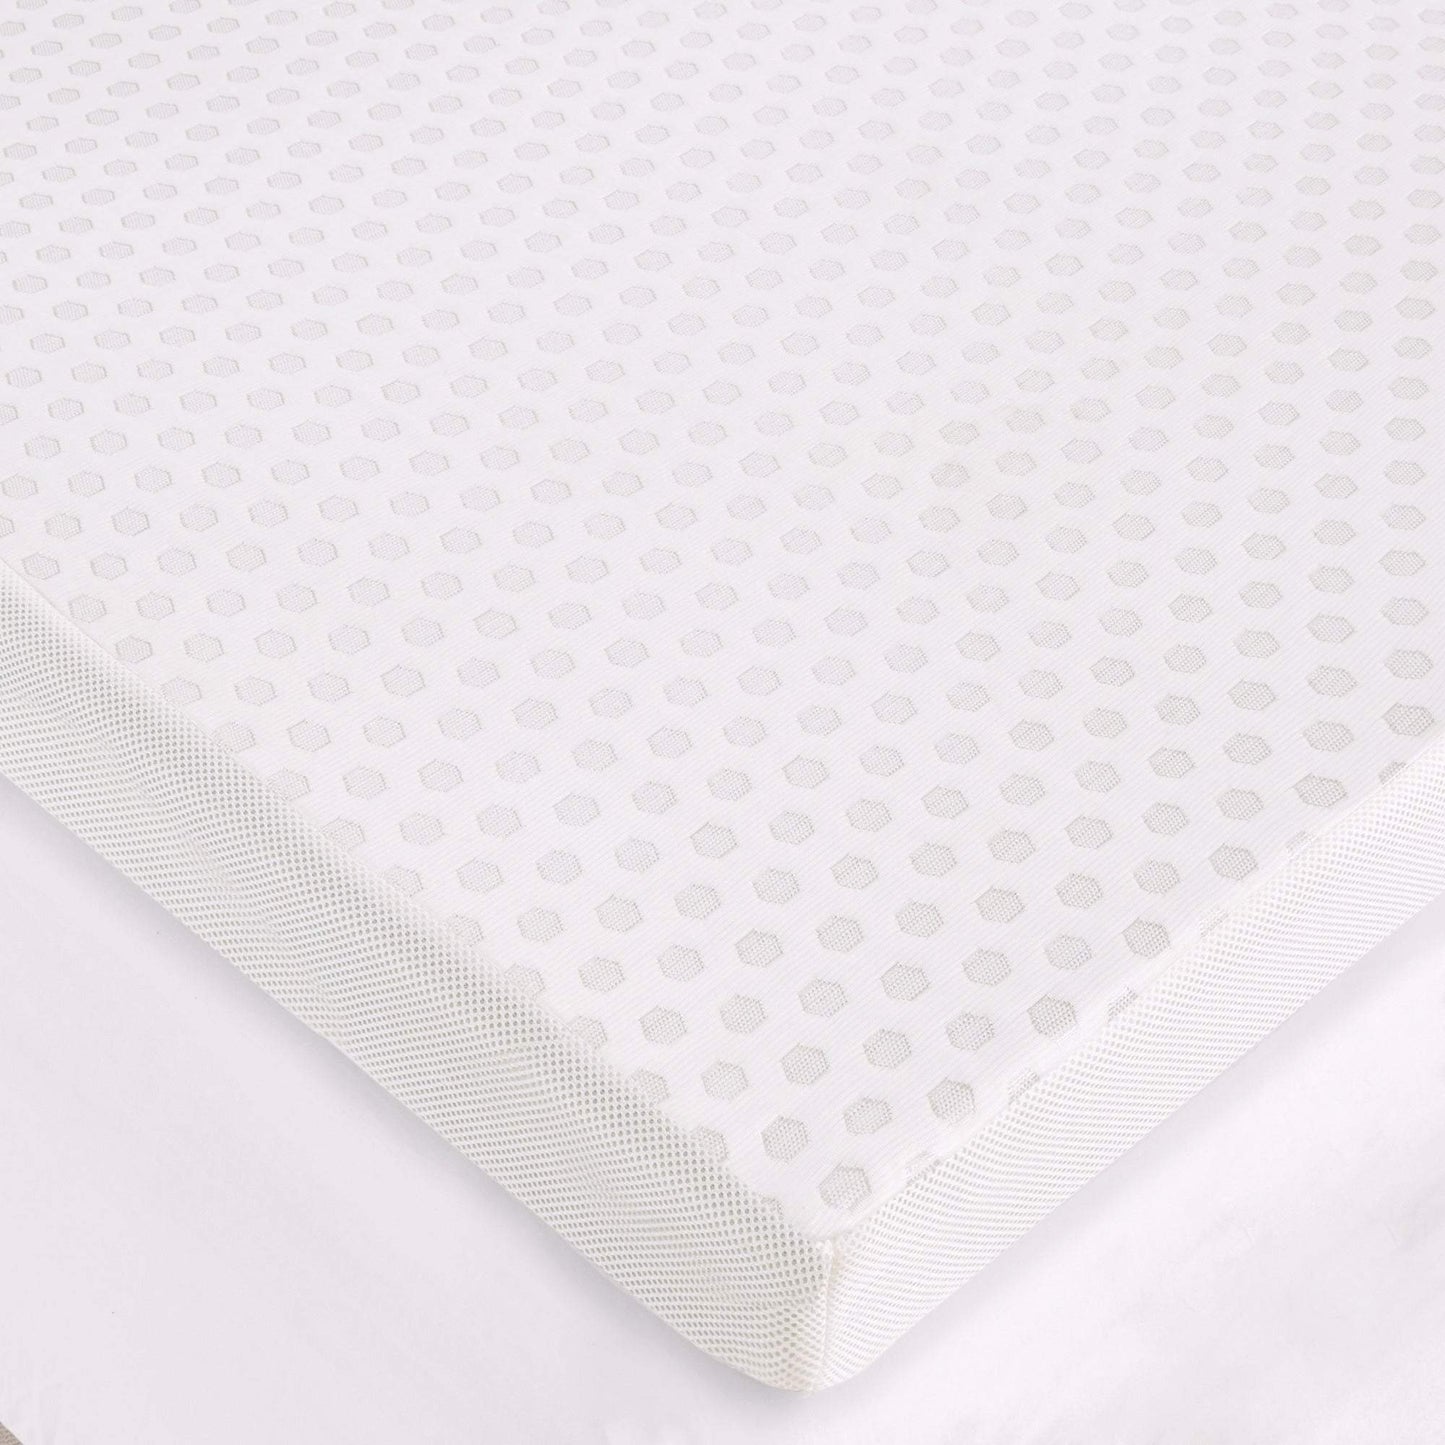 3" Gel Memory Foam with Cooling Cover White Mattress Topper Mattress Topper By Olliix/JLA HOME (E & E Co., Ltd)